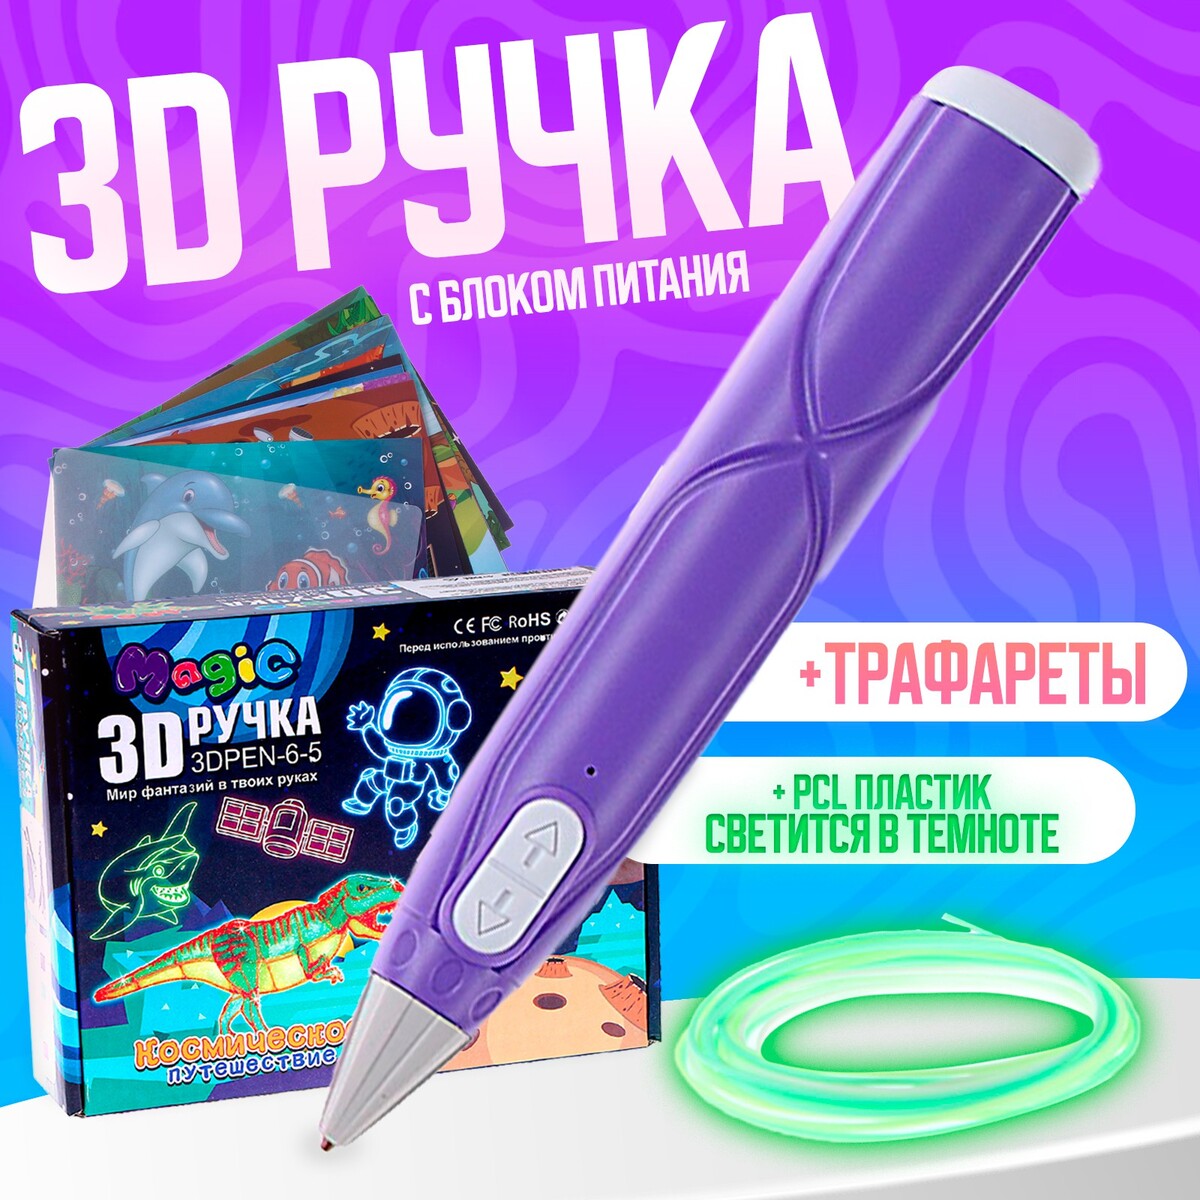 3d ручка, набор pcl пластика светящегося в темноте, мод. pn014, цвет фиолетовый набор для творчества dream studio фиолетовый